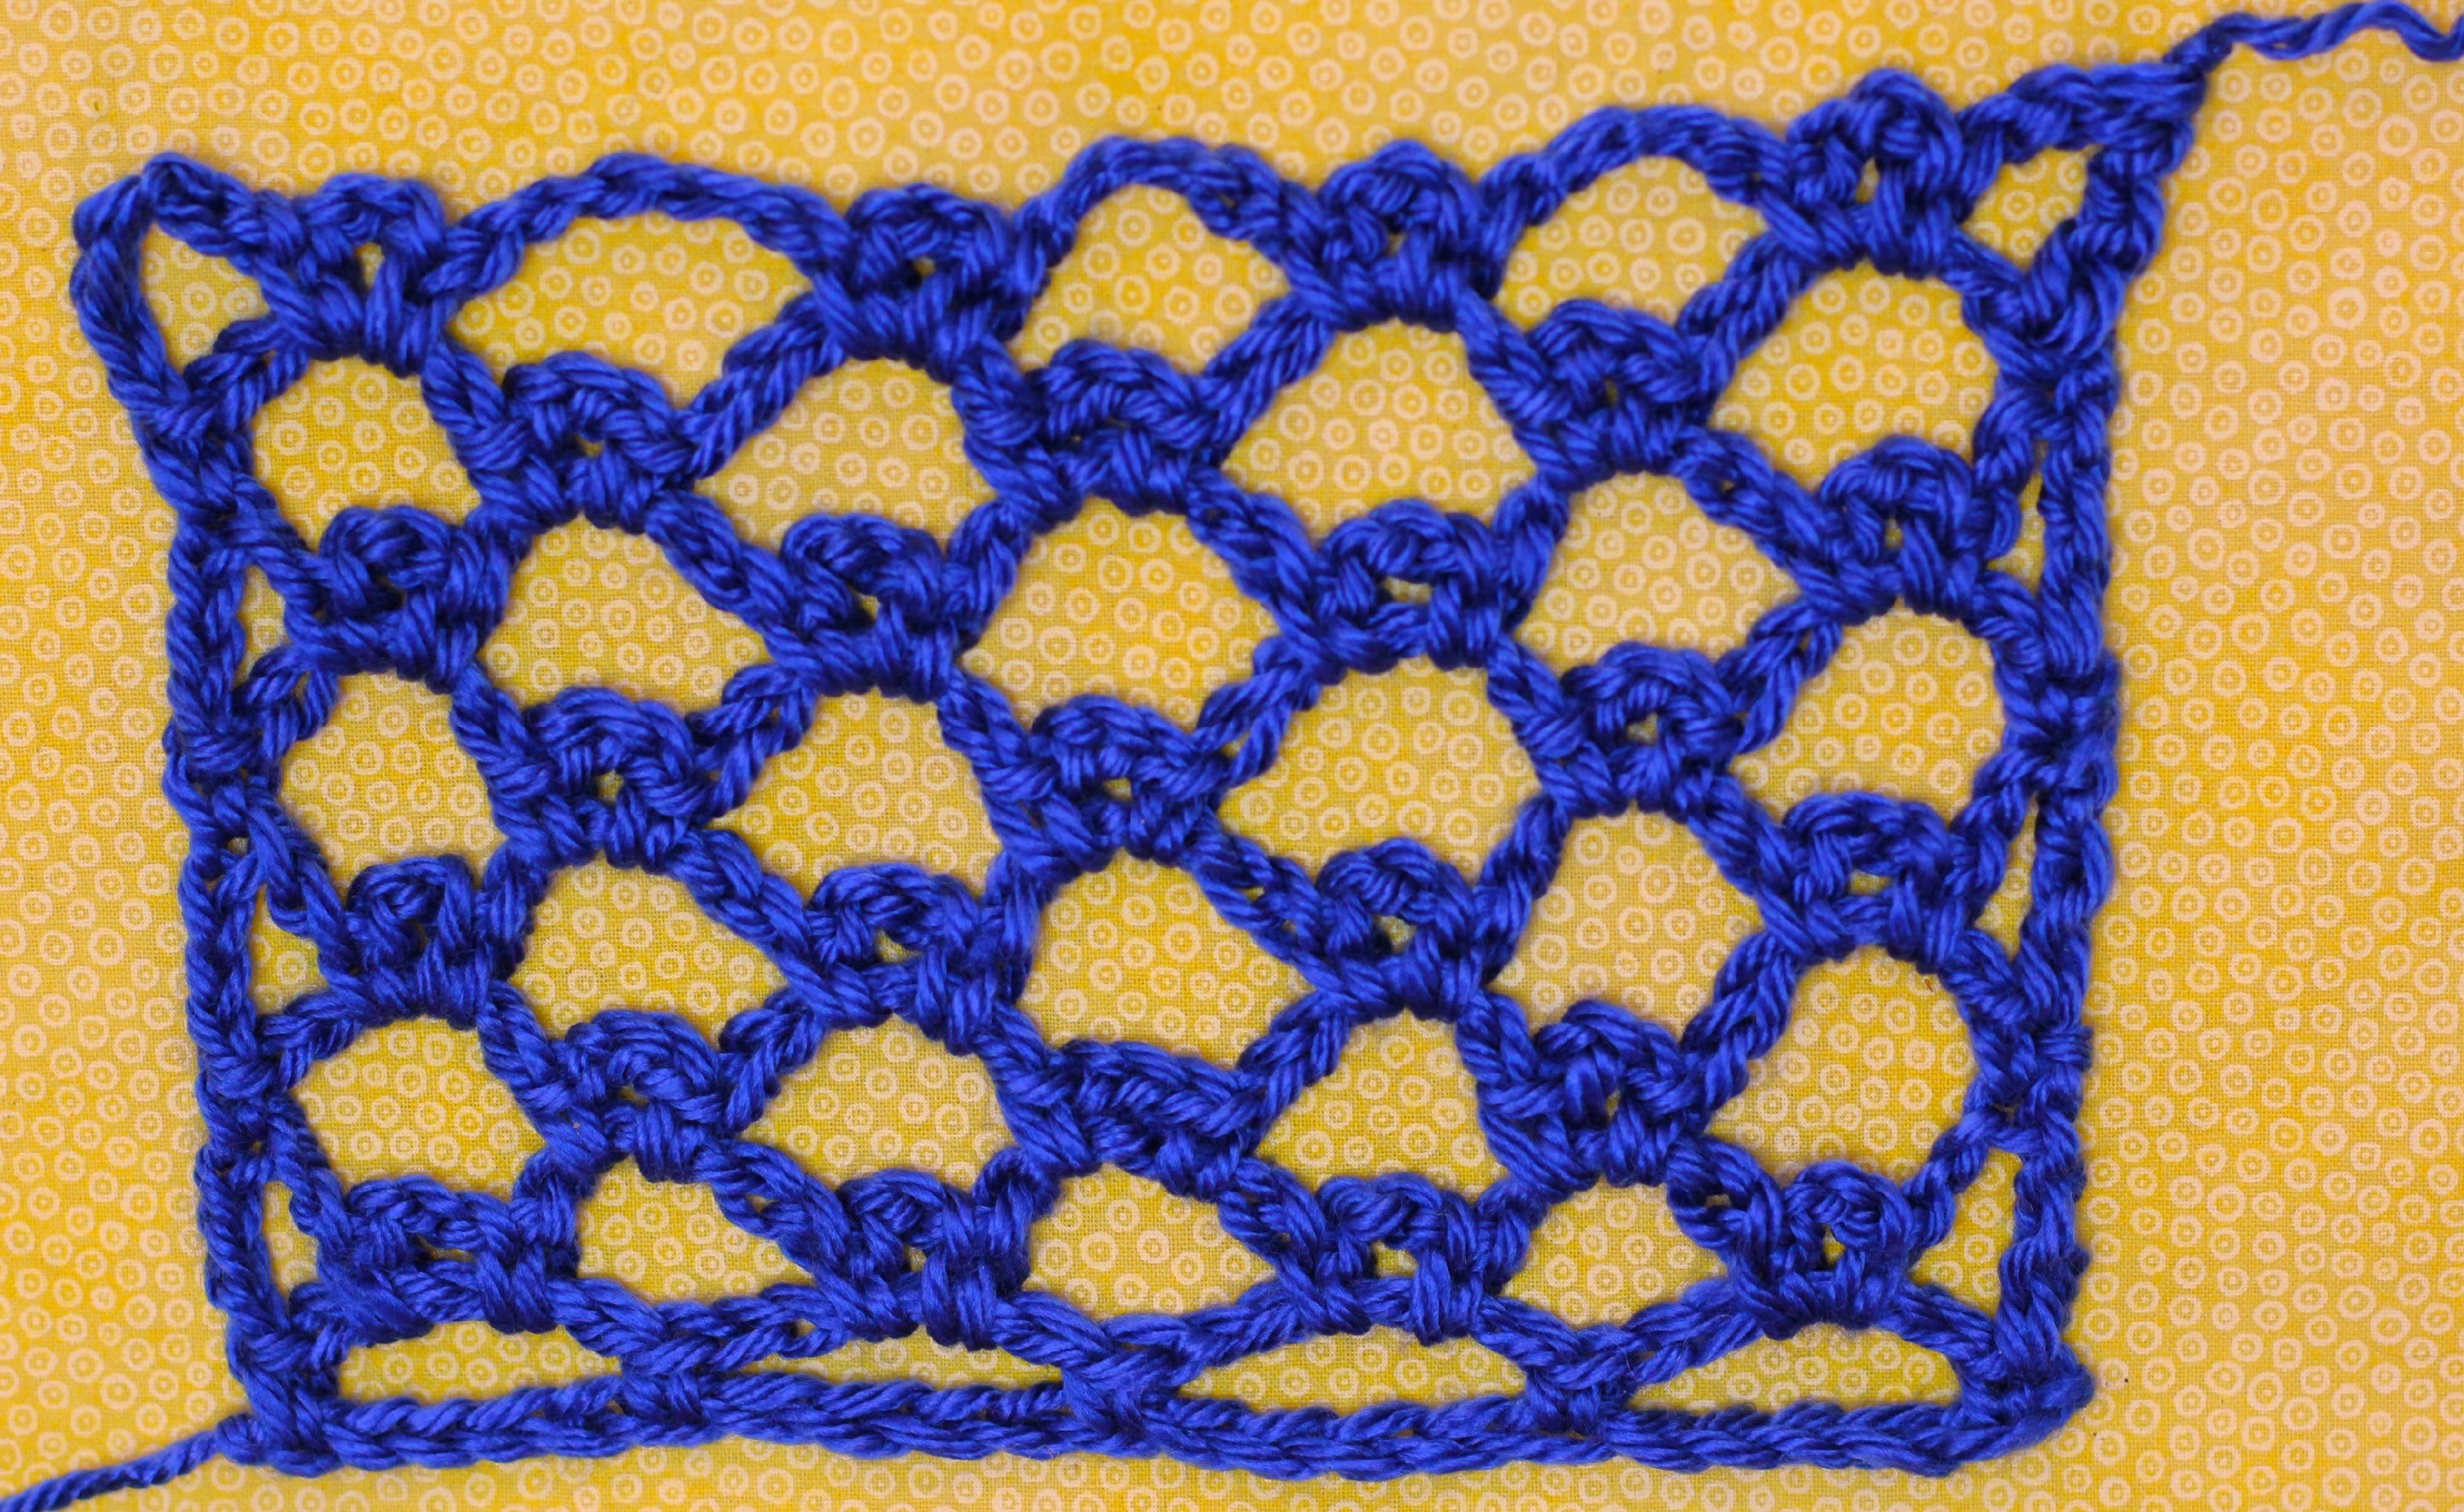 Crochet - otra muestra